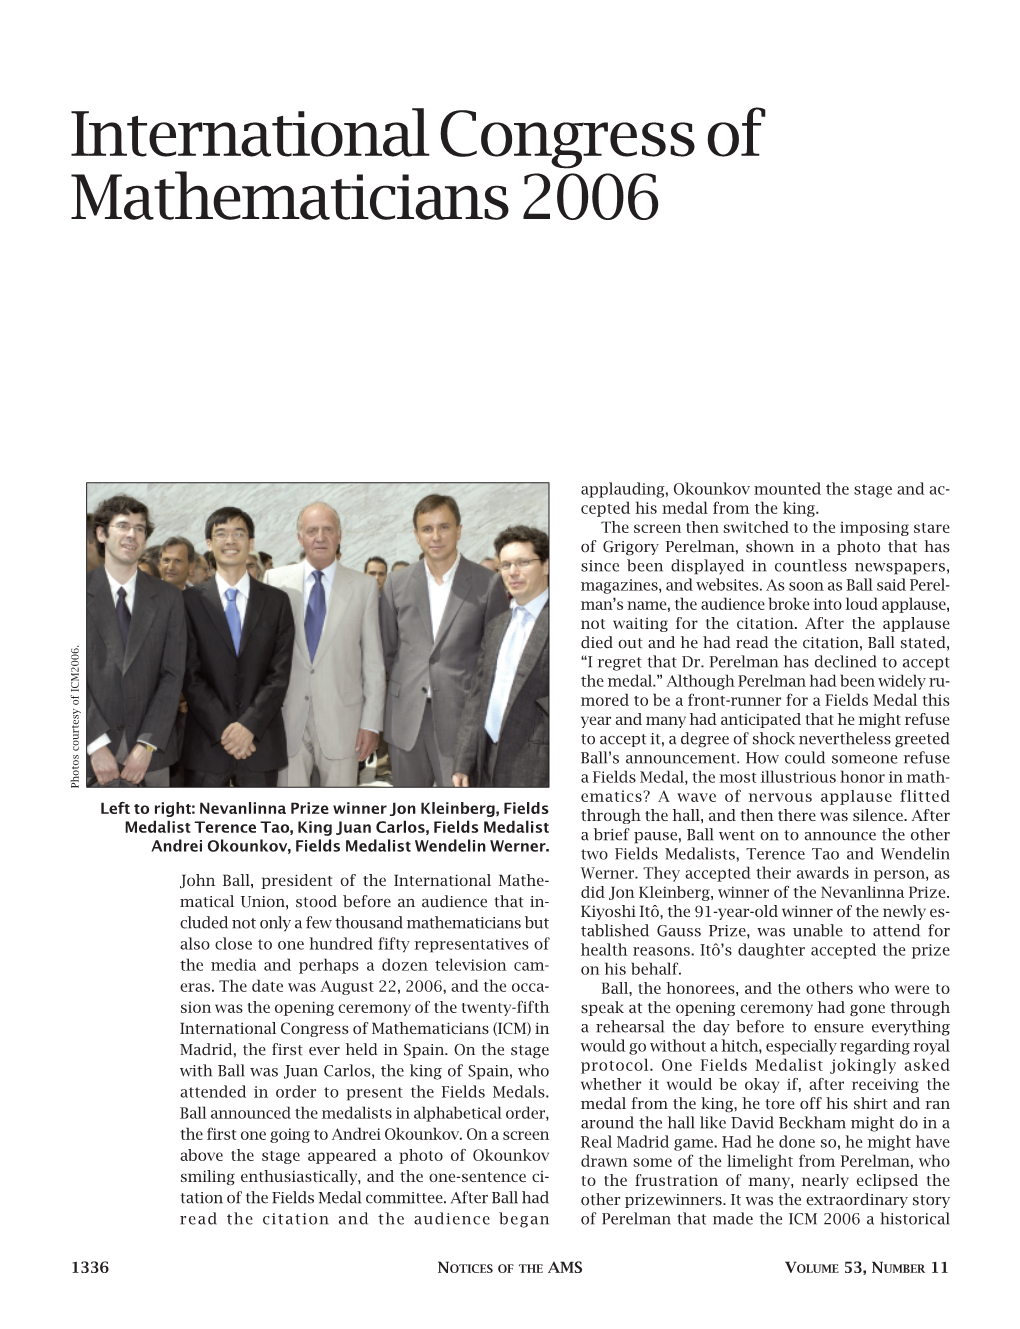 International Congress of Mathematicians 2006, Vollume 53, Number 11